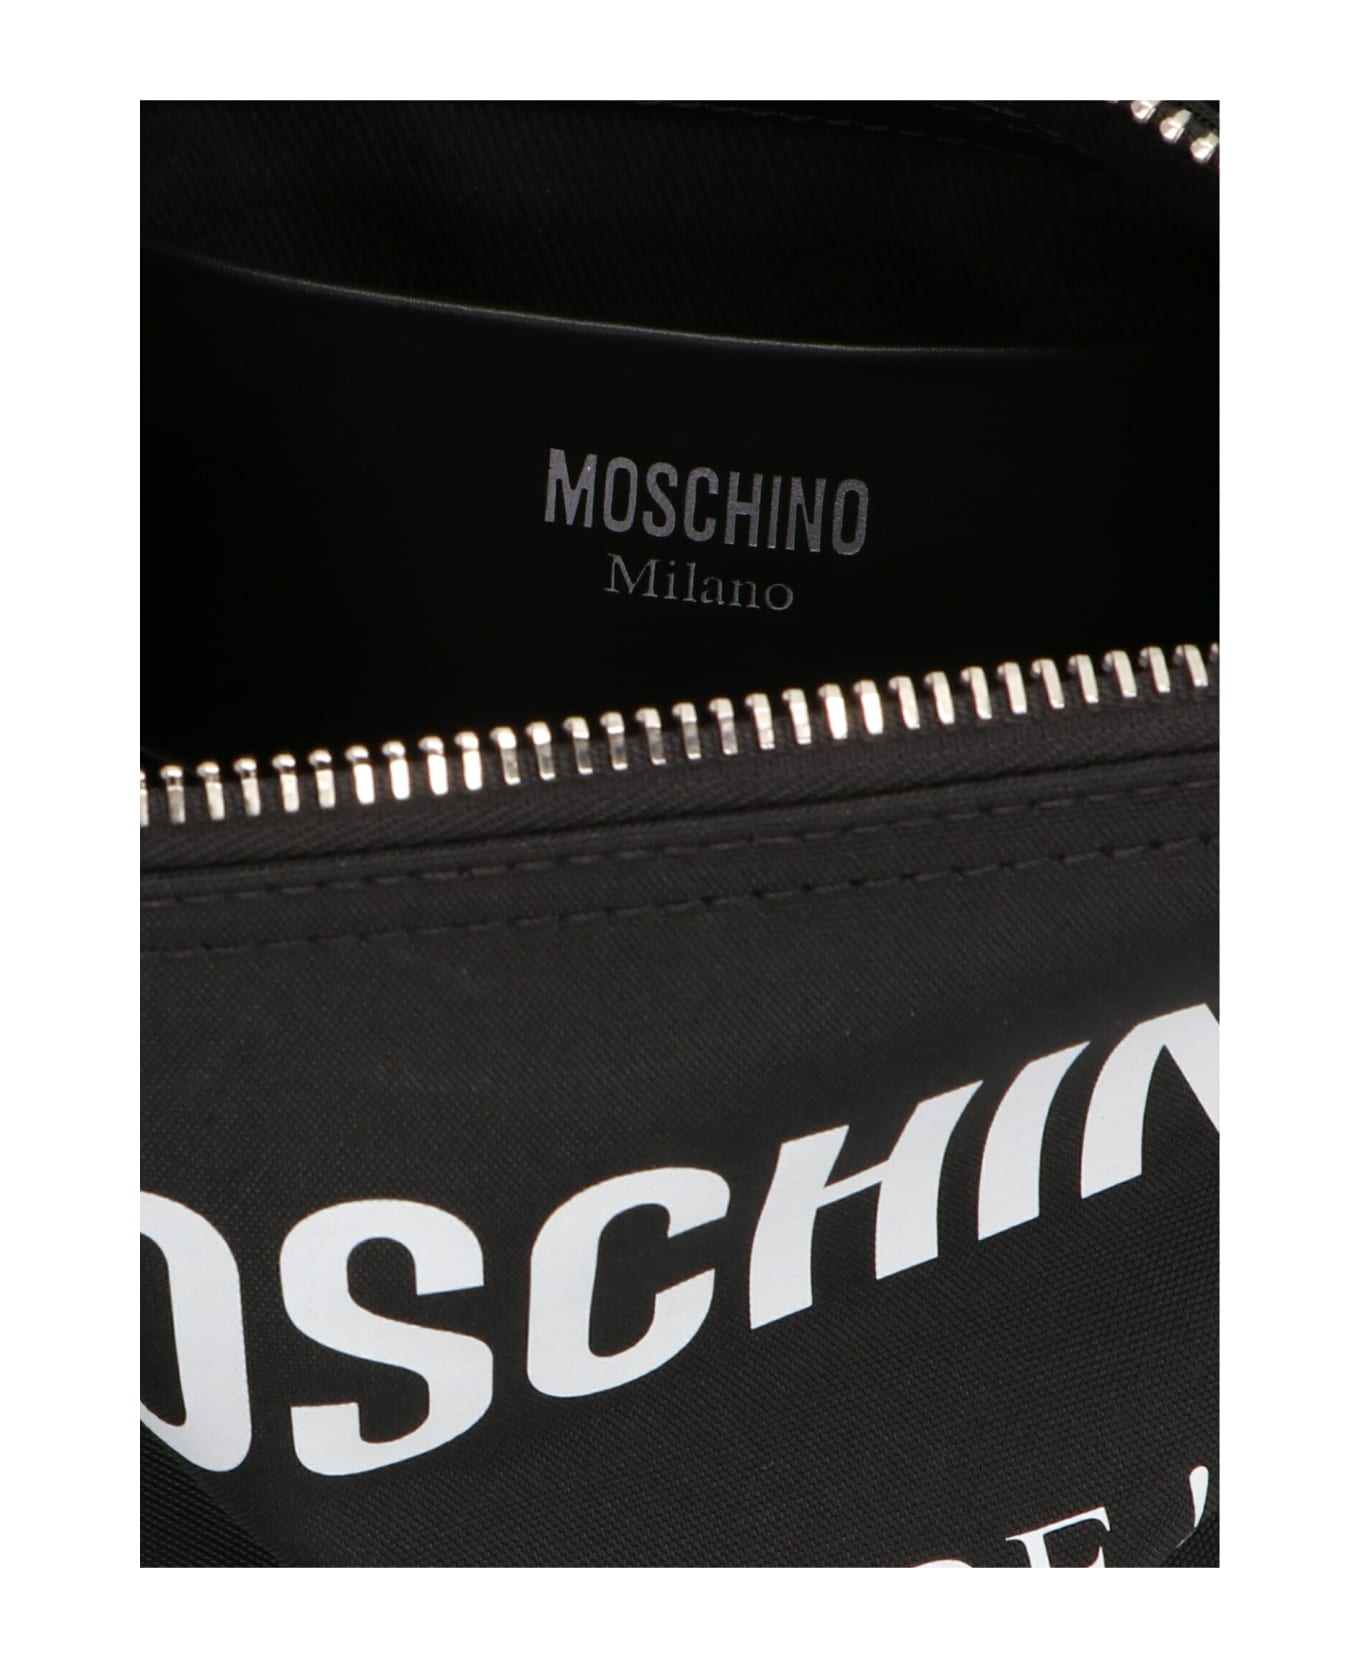 Moschino Messenger Crossbody Bag - 2555